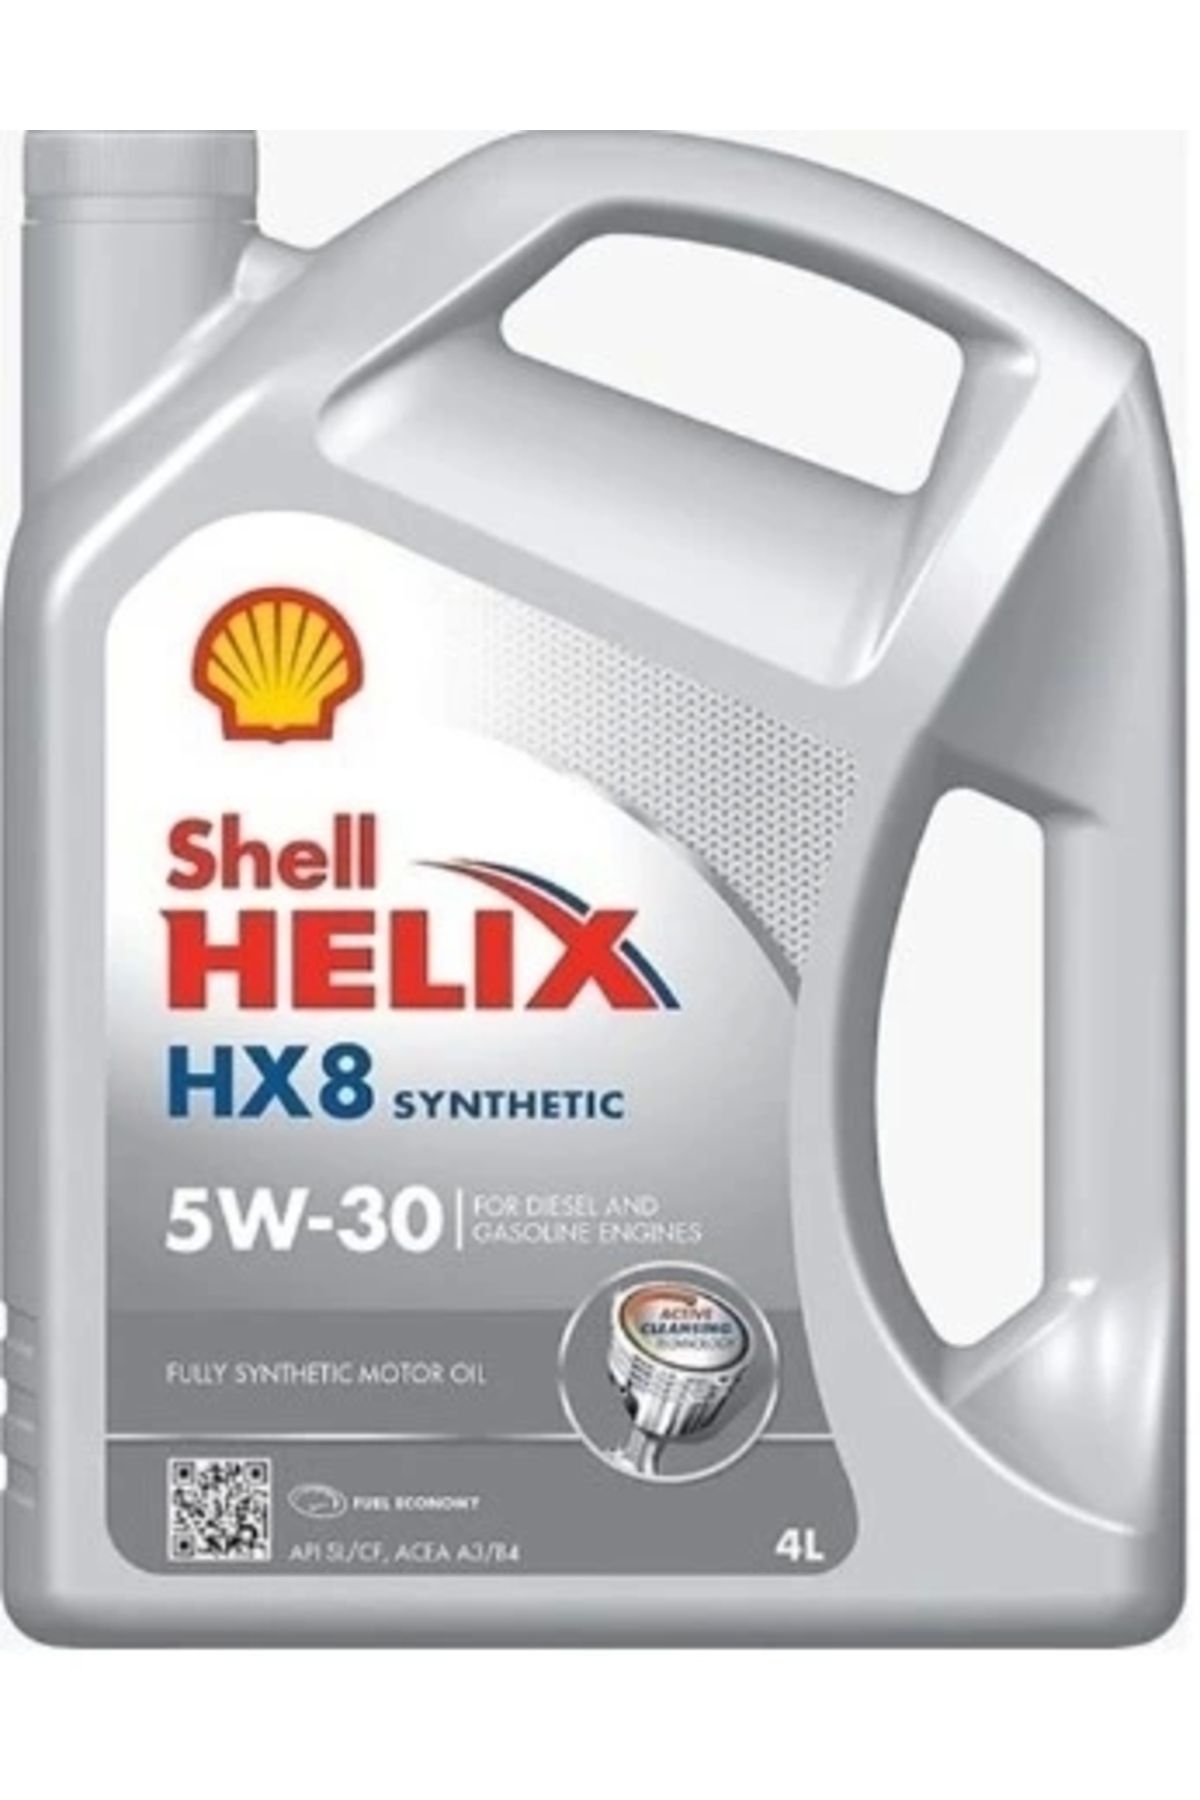 Shell Helıx Hx8 5w-30 4 Litre